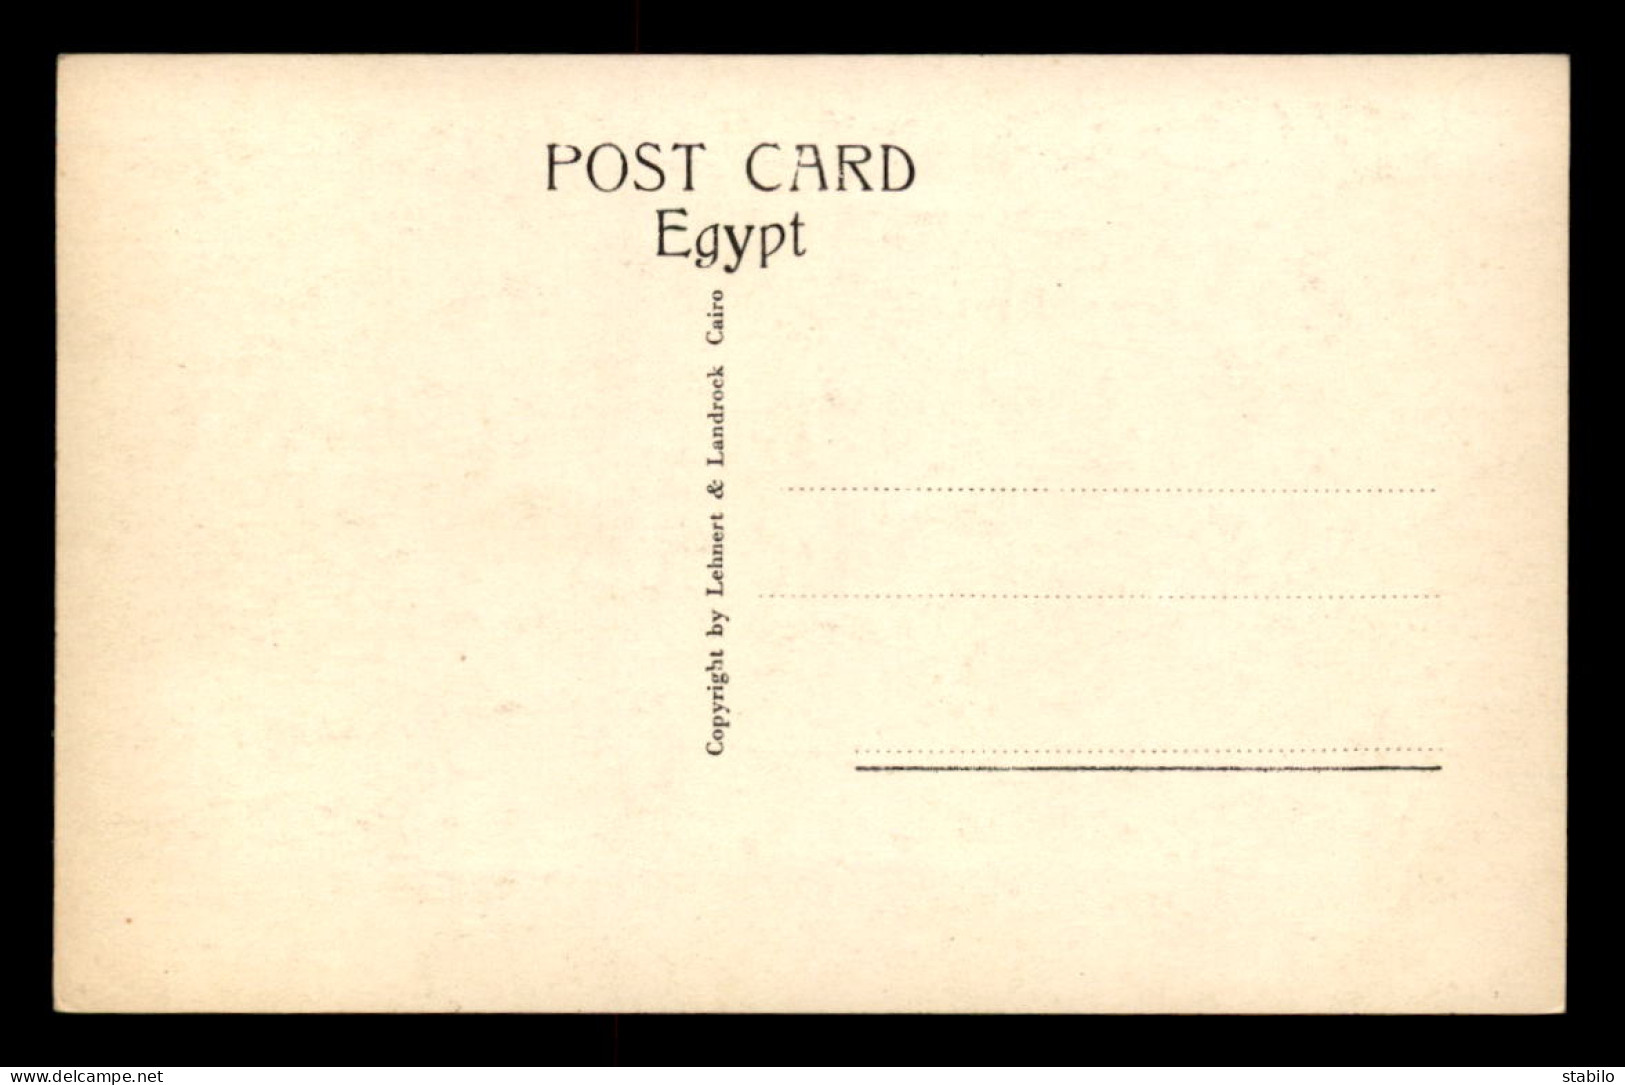 EGYPTE - LENHERT & LANDROCK N°107 - CAIRO - MAMELOUK TOMBS AND CITADEL - El Cairo